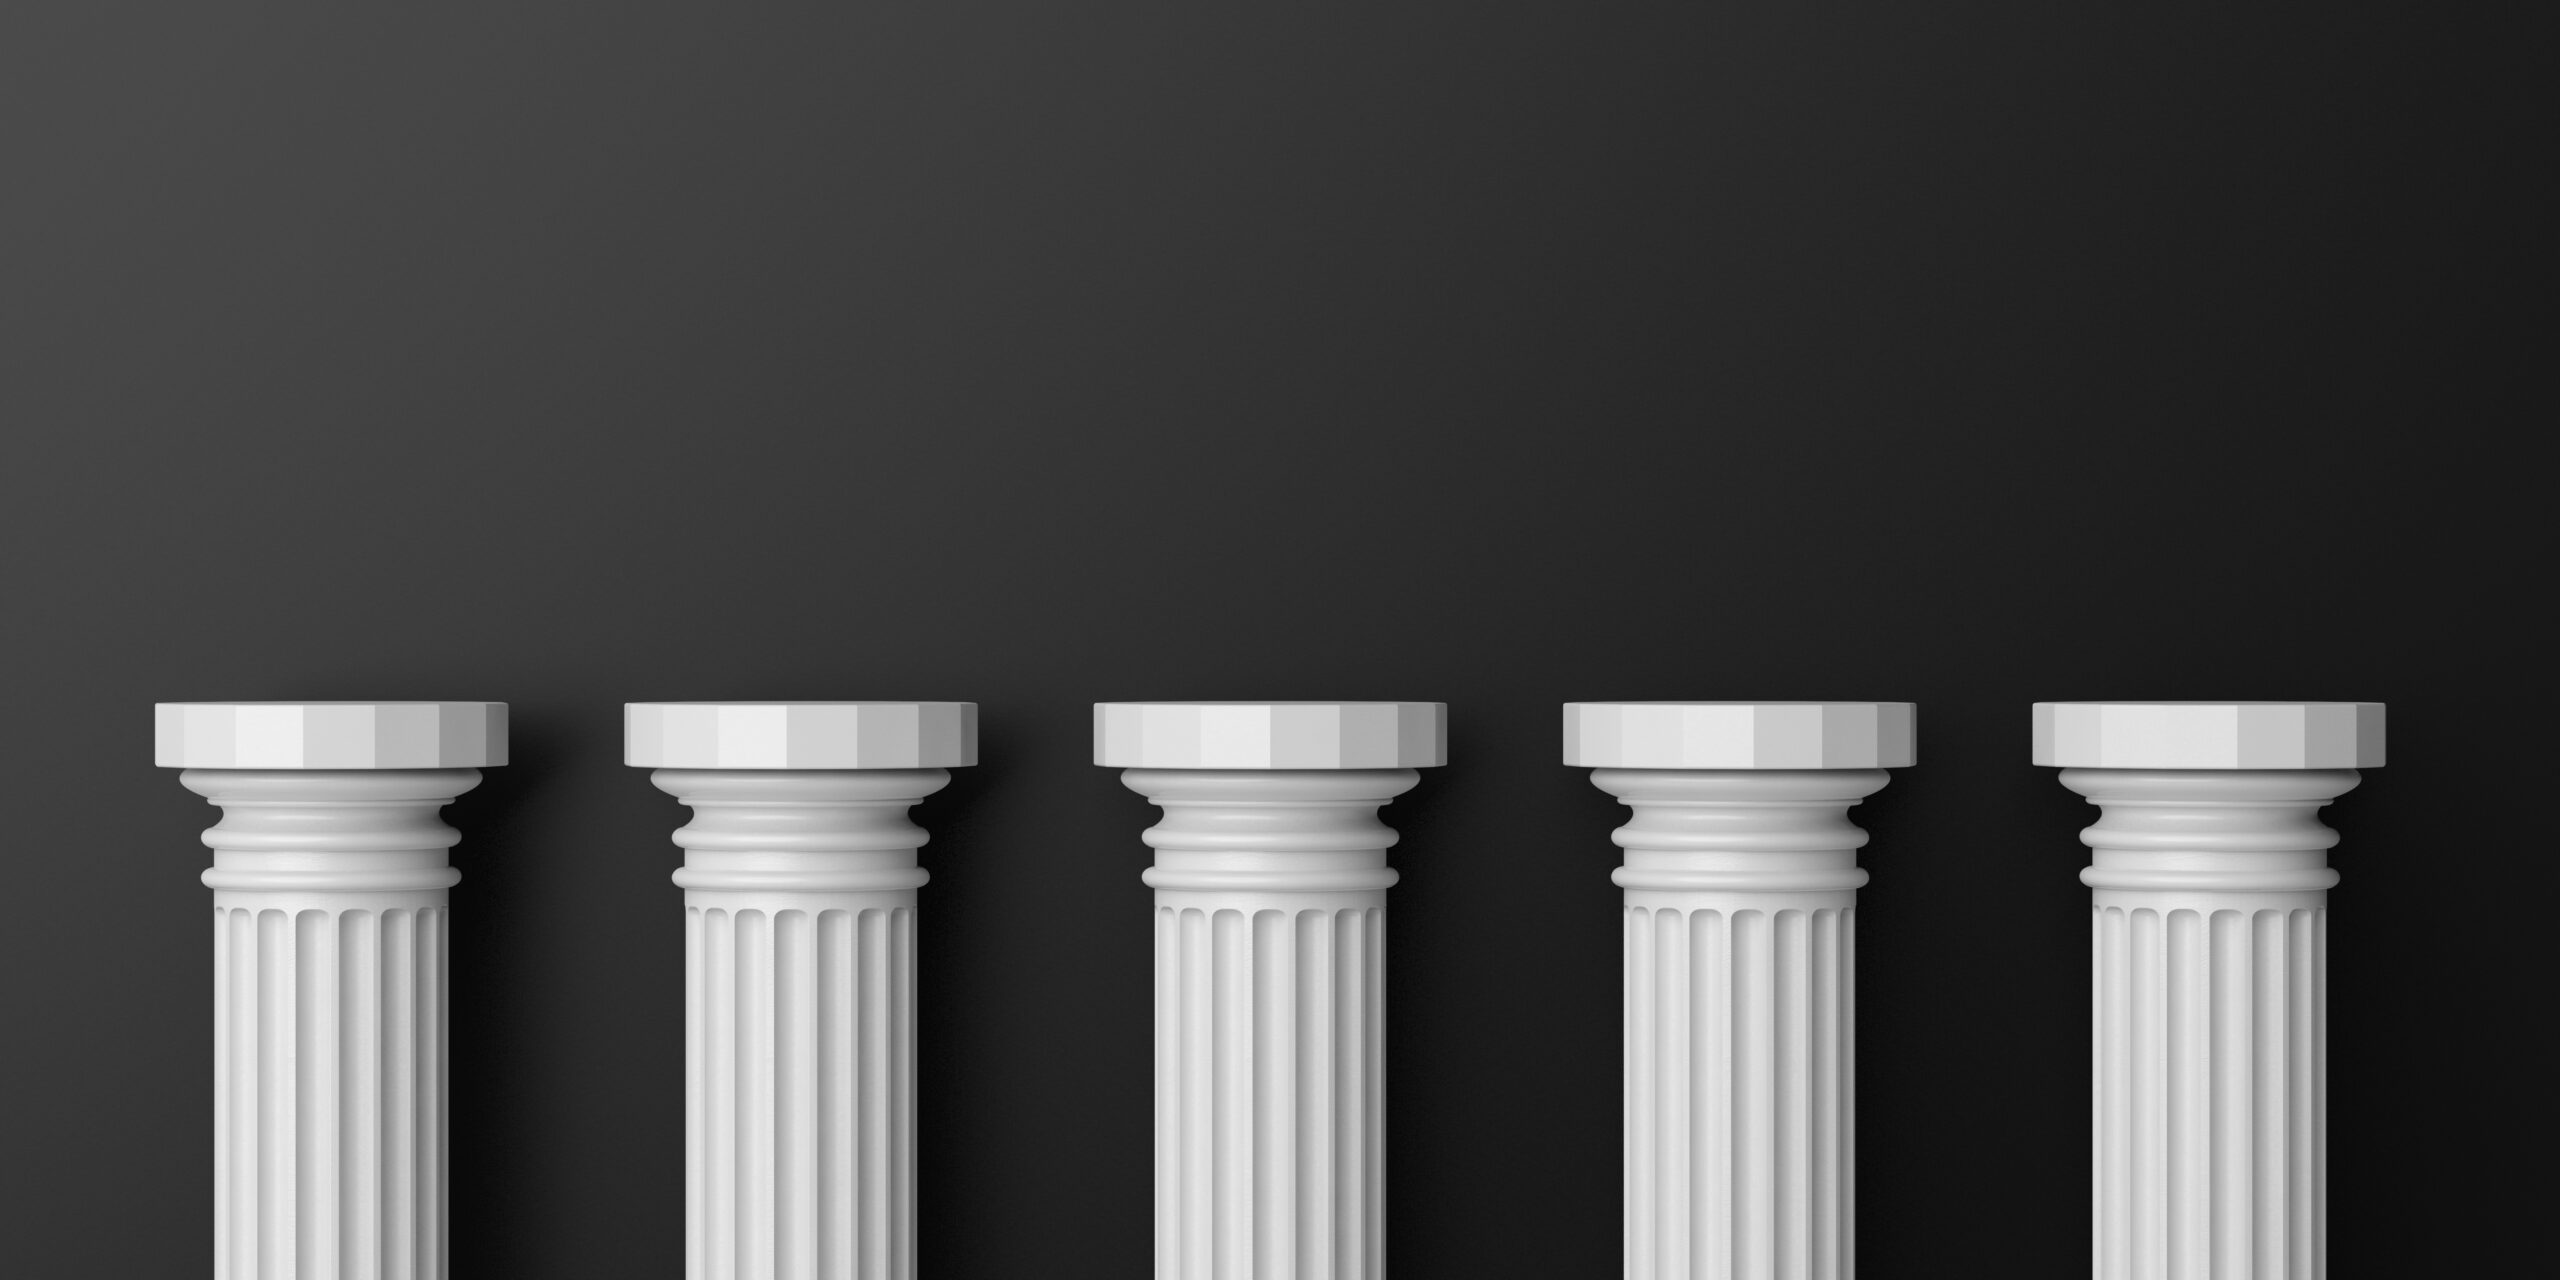 Five white pillars in front of a dark grey background.